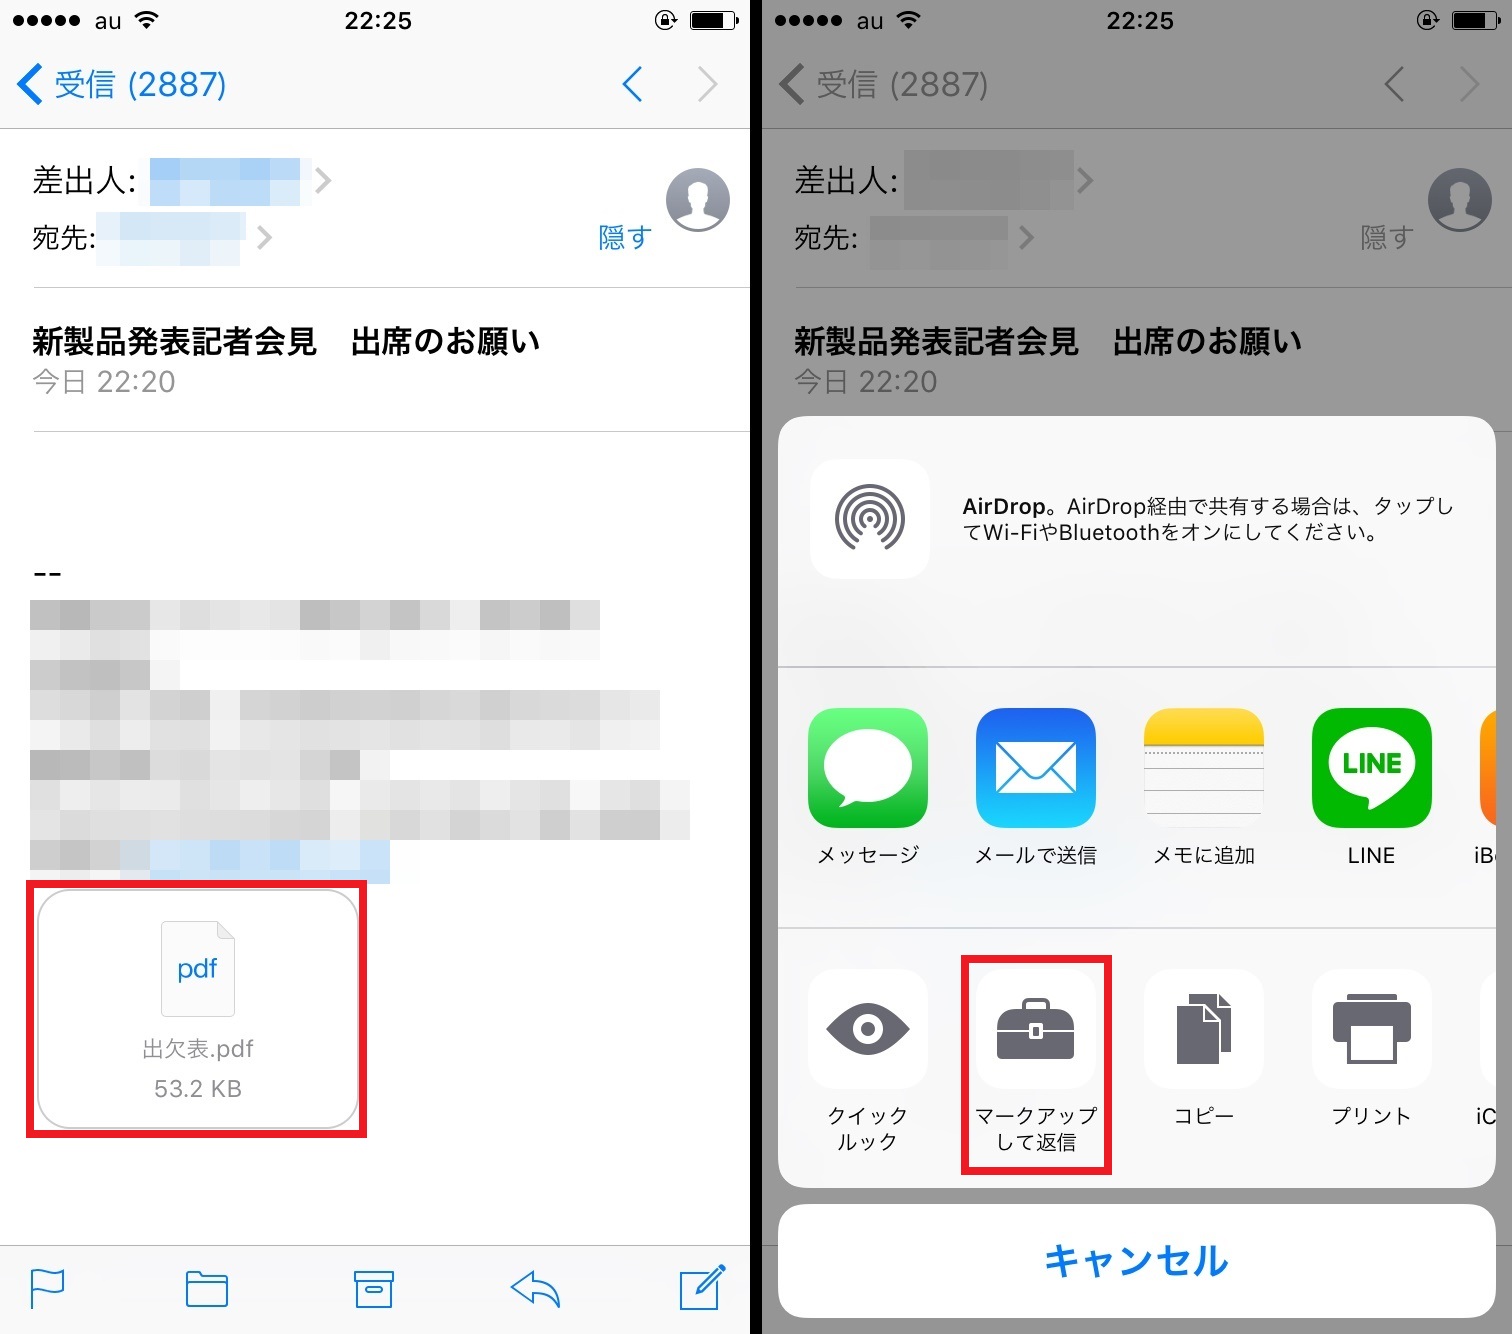 Iphoneでpdfを編集したい 簡単な書き込みなら Markup におまかせ Iphone Tips Engadget 日本版